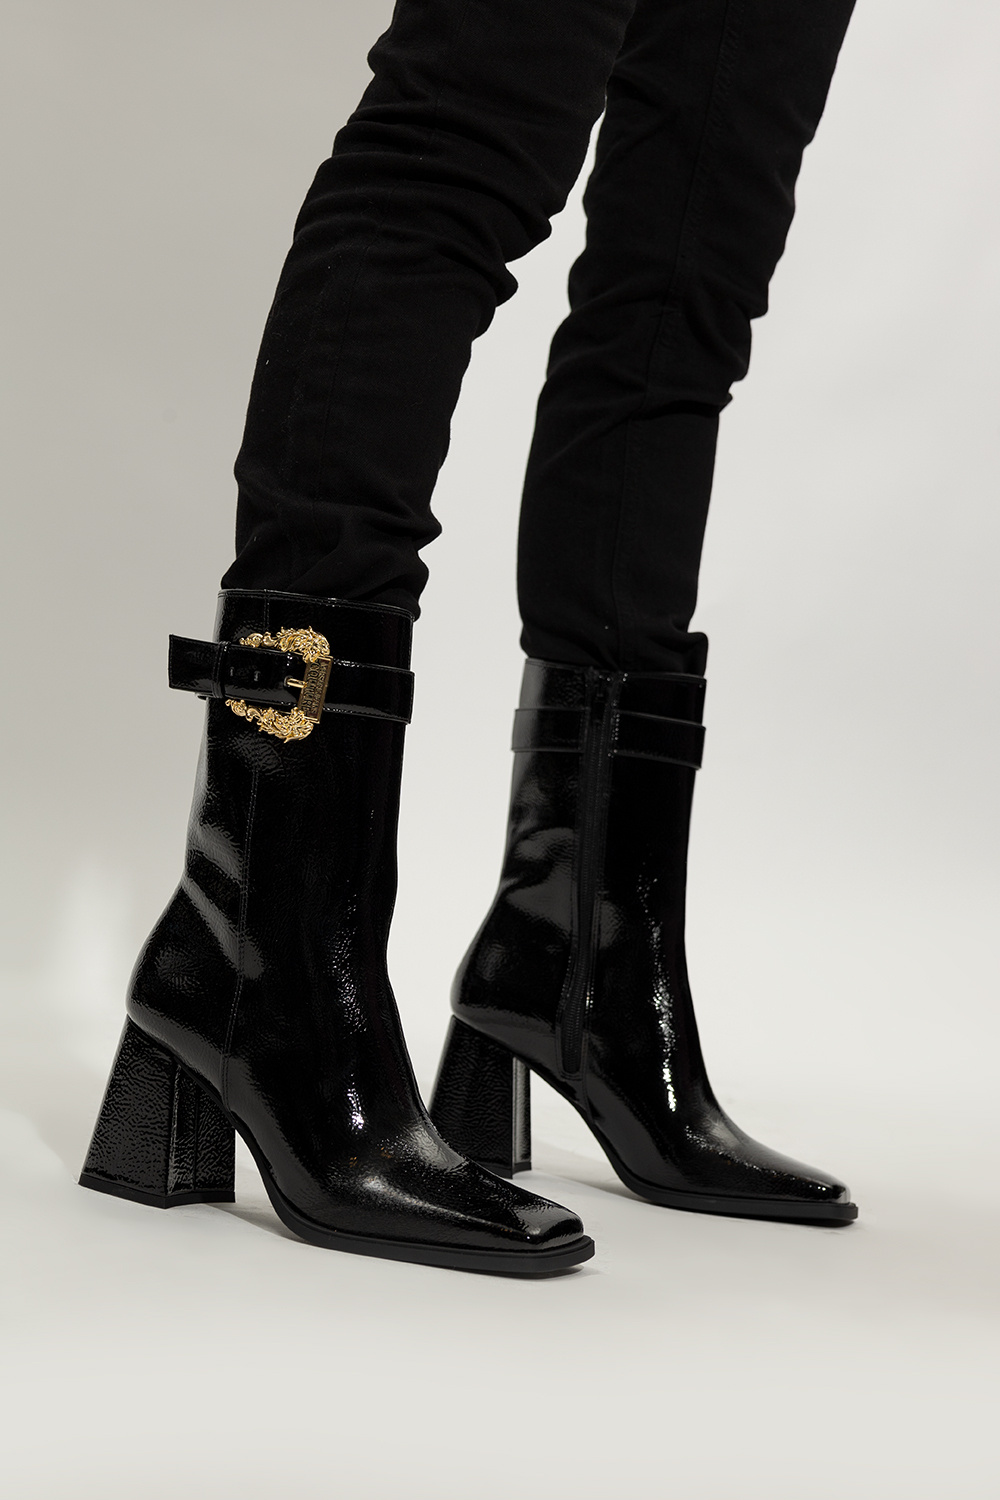 Versace Jeans Couture zapatillas de running apoyo talón baratas menos de 60€ mejor valoradas